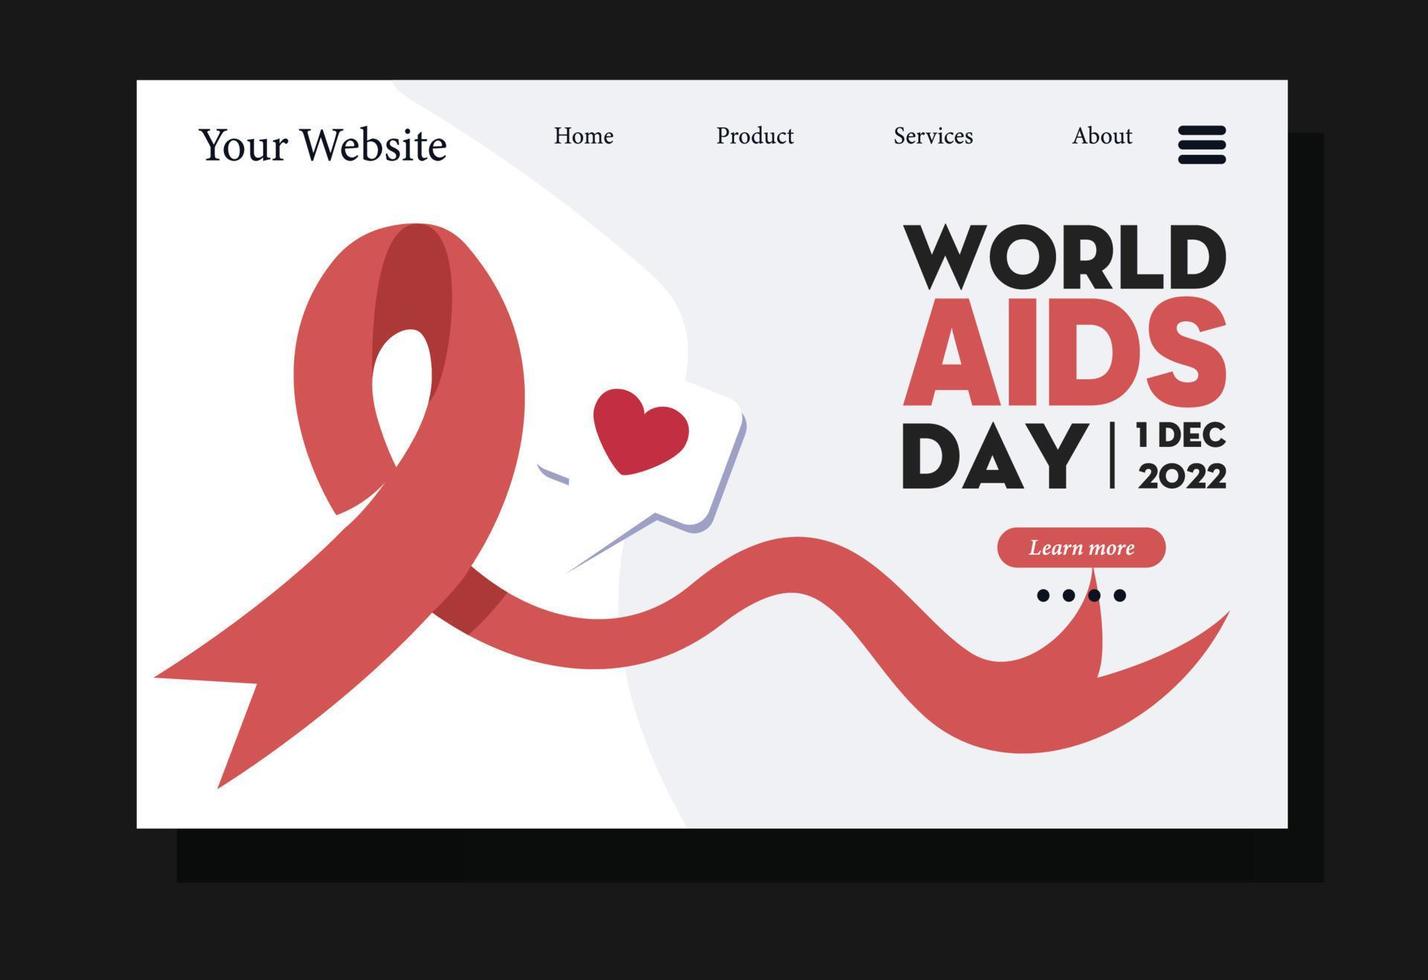 dia mundial da aids vetor